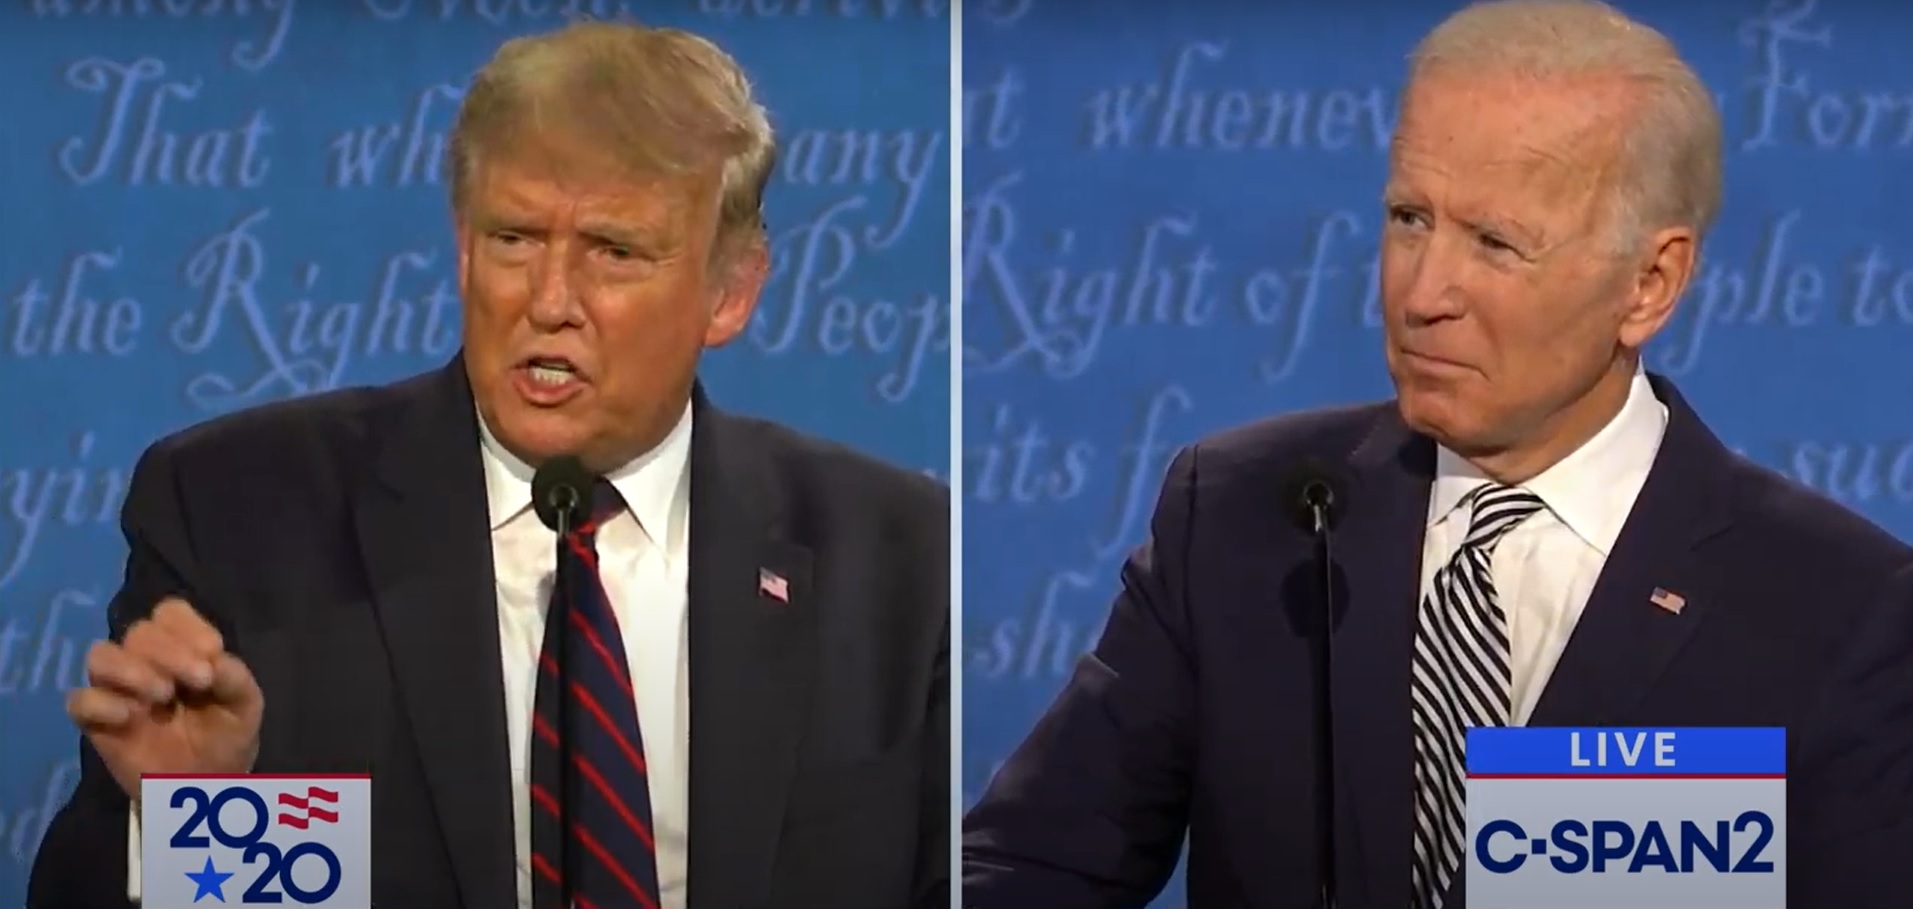 Five key science takeaways from the first presidential debate